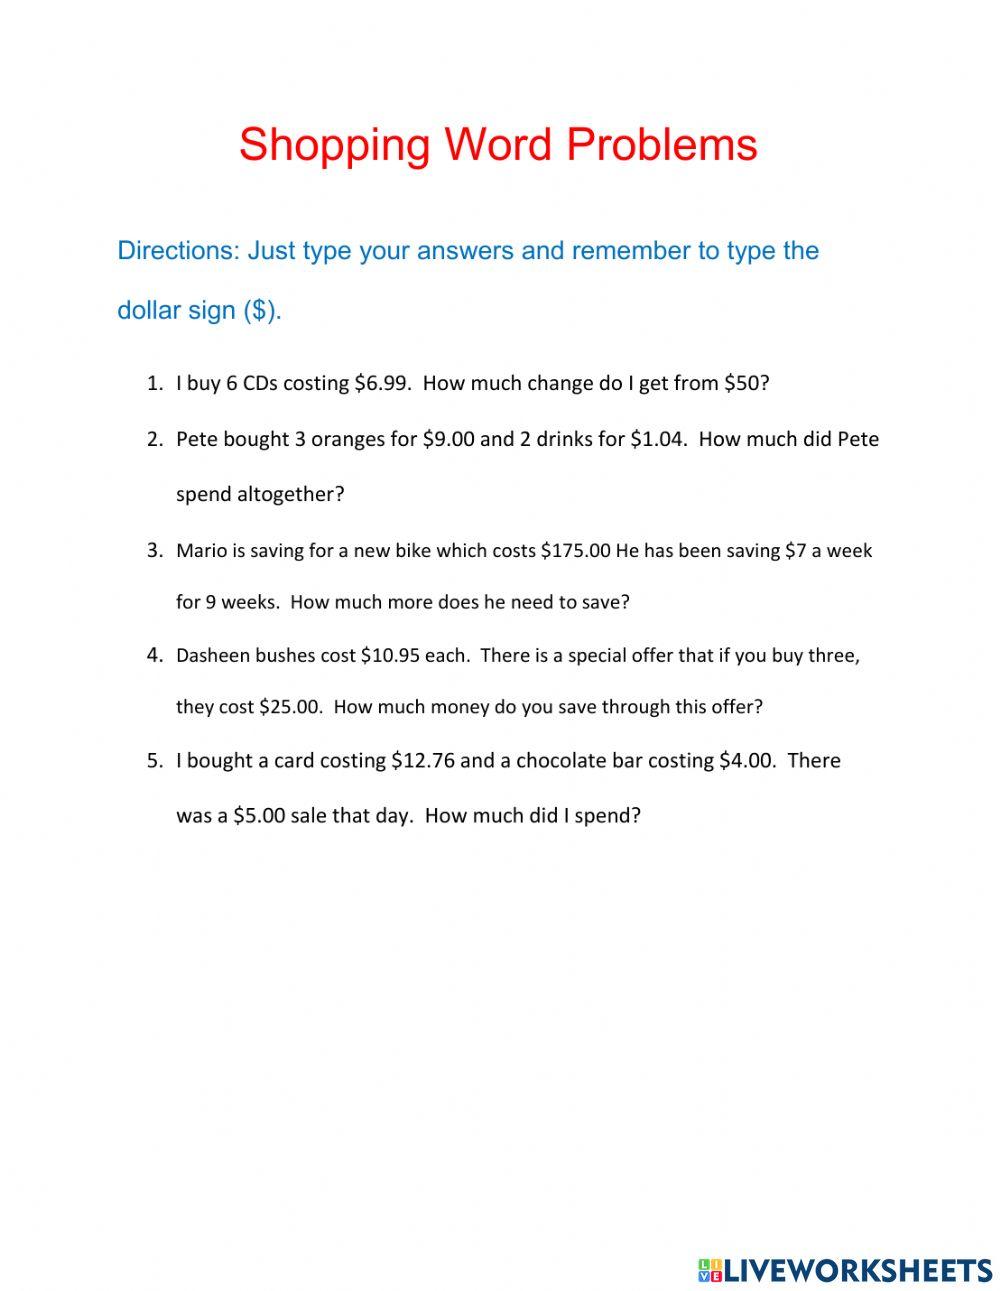 Shopping Word Problem